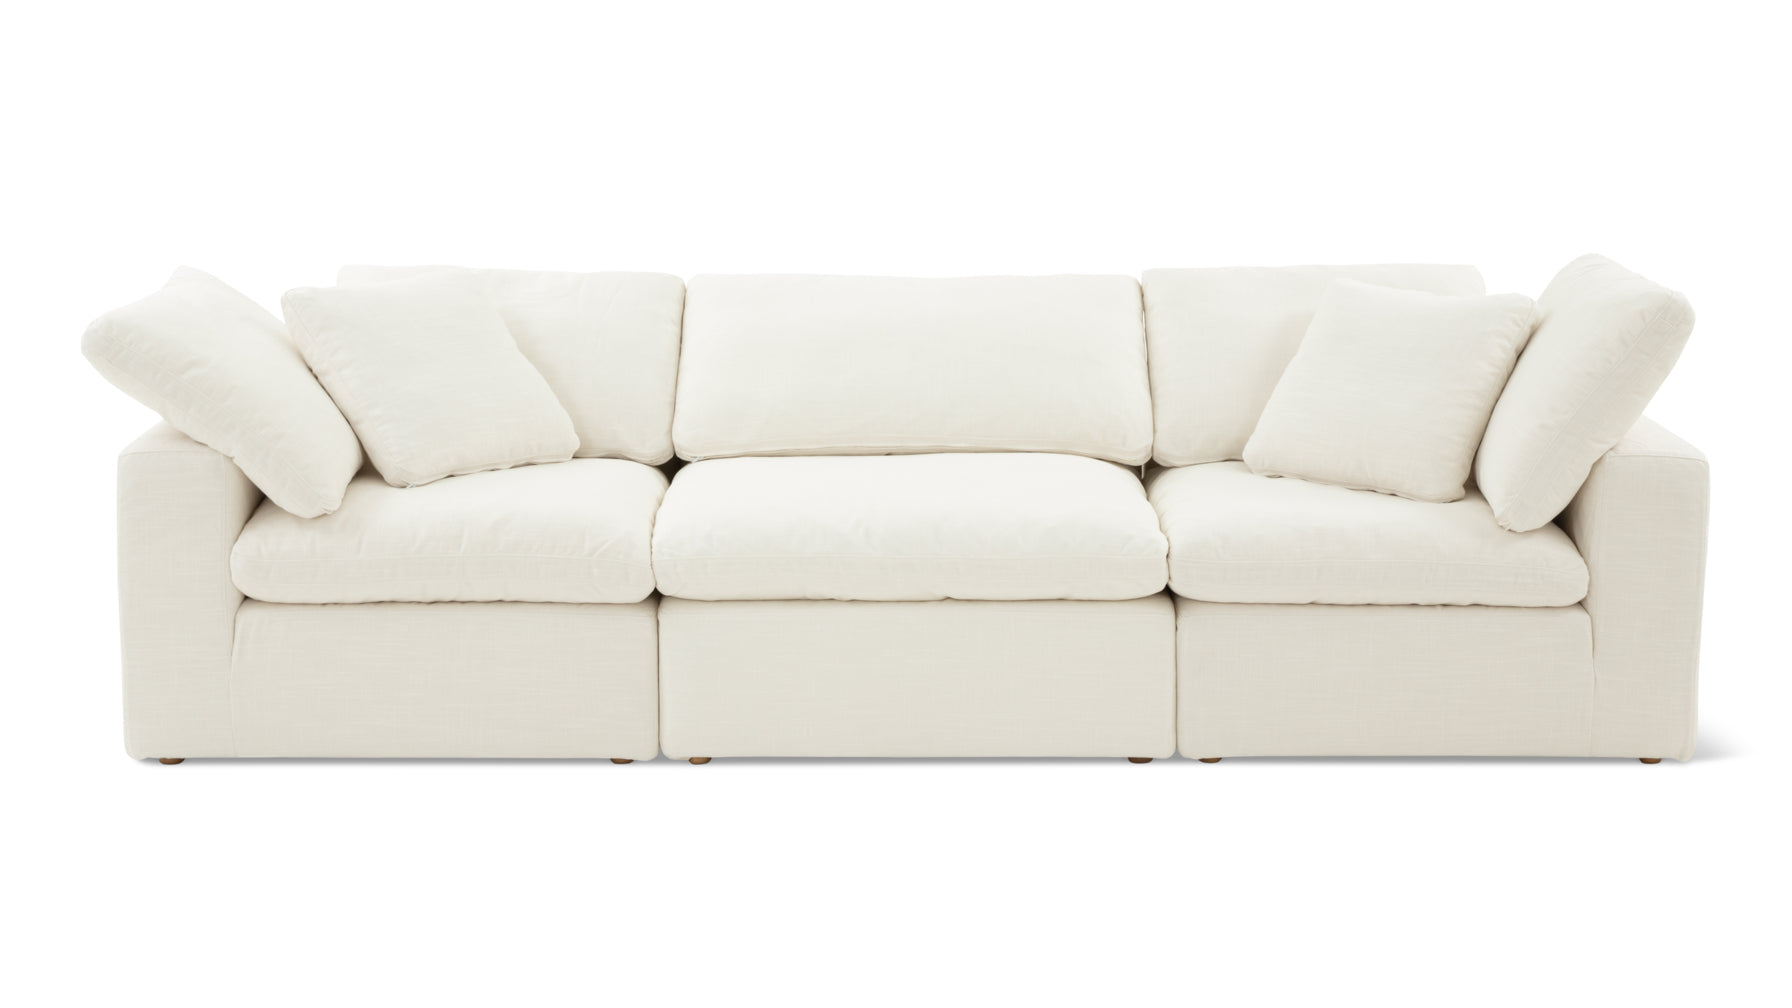 Movie Night™ 3-Piece Modular Sofa, Large, Cream Linen - Image 1